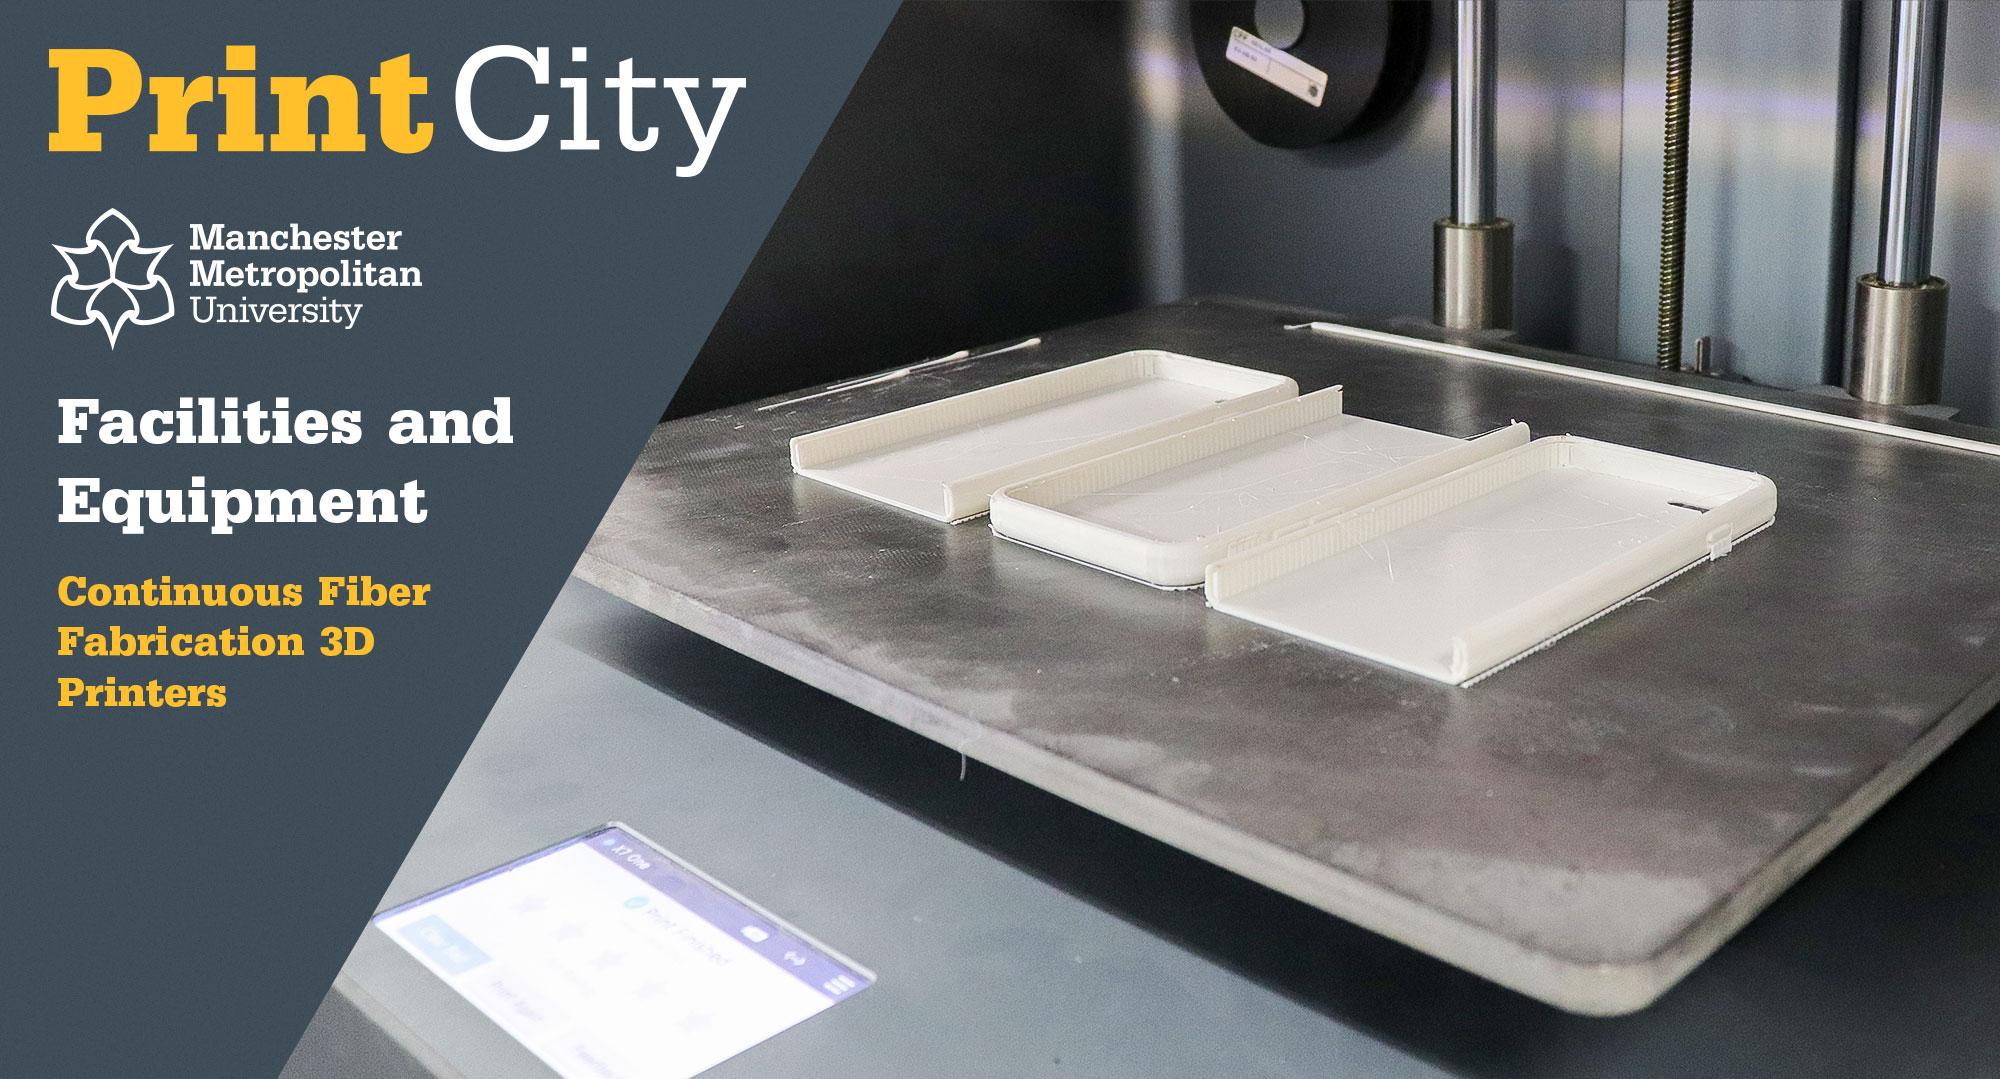 Continuous Fiber Fabrication 3D Printers - PrintCity - Manchester Metropolitan University - Facilities and Equipment